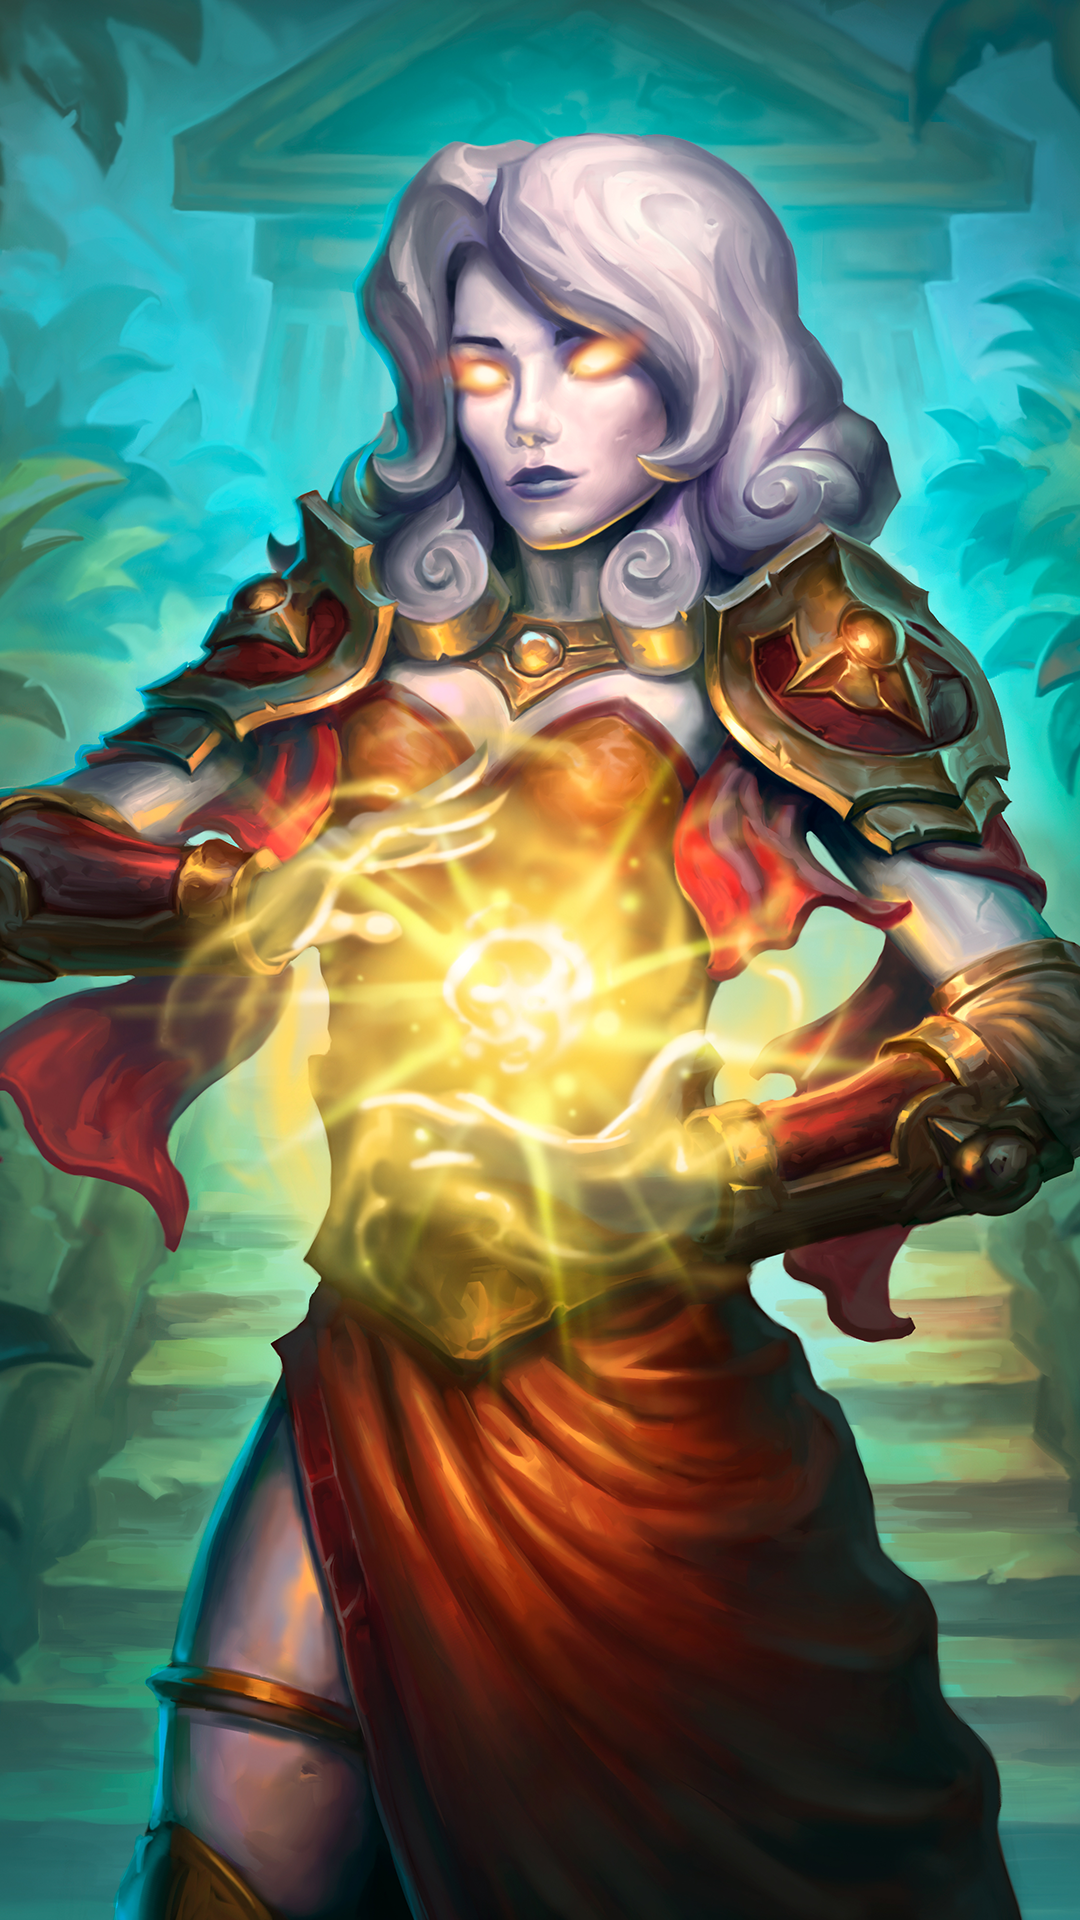 General 1080x1920 Hearthstone: Heroes of Warcraft Hearthstone un'goro fantasy girl glowing eyes PC gaming magic fantasy art